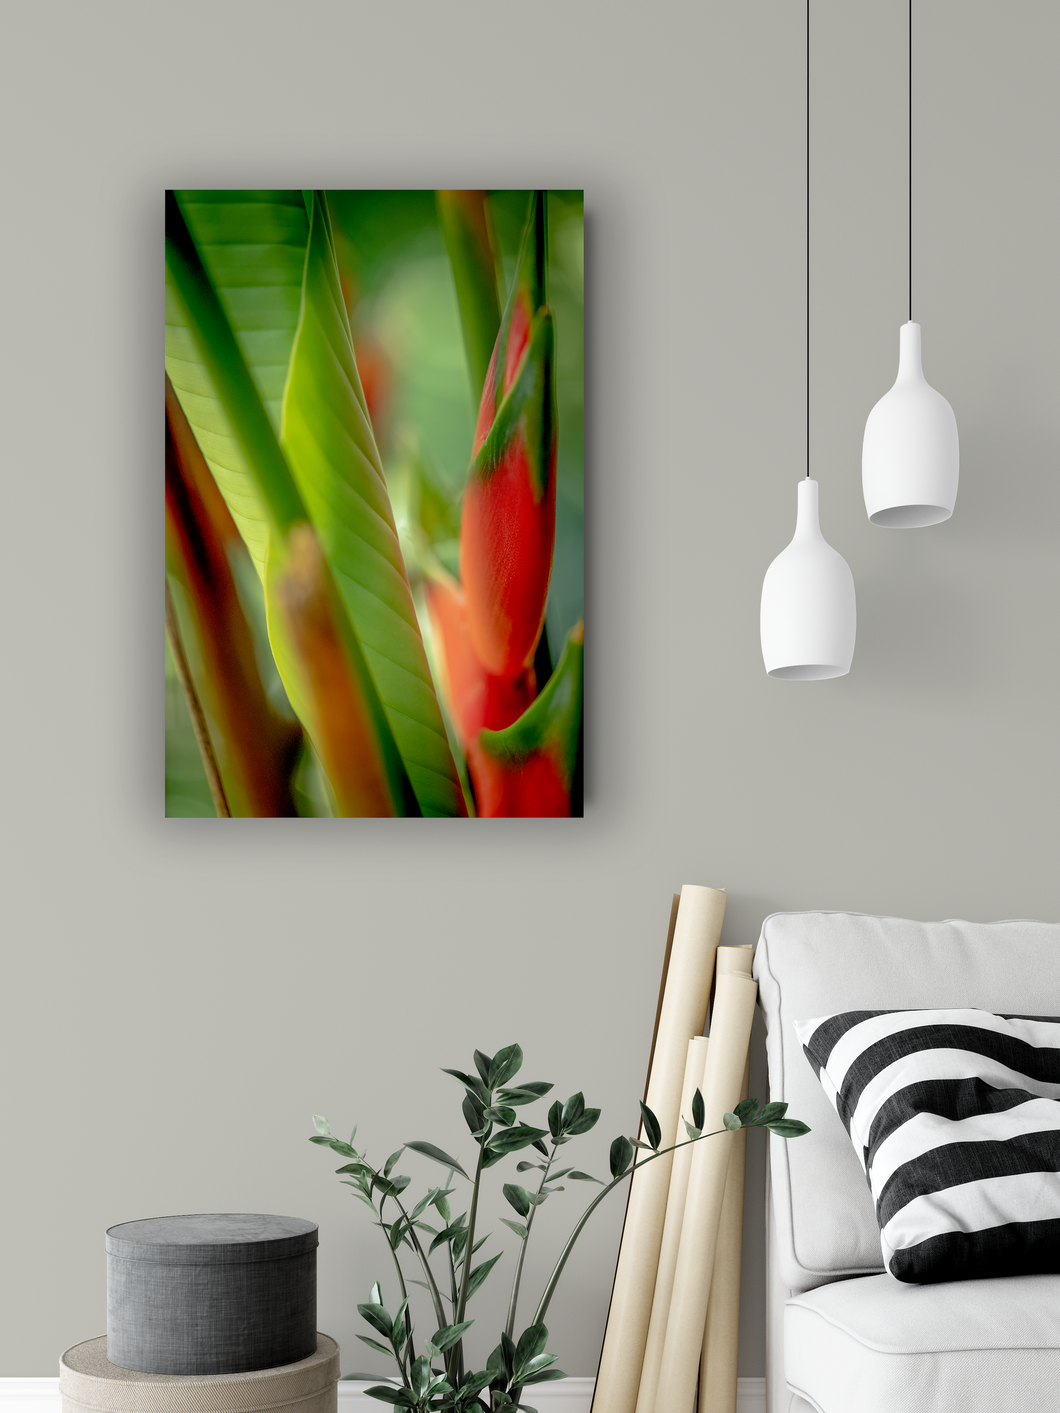 Red heliconia, lush green jungle foliage, Abstract, Manoa, Oahu, Hawaii, Metal Art Photo Print, Living Room Interior, Image